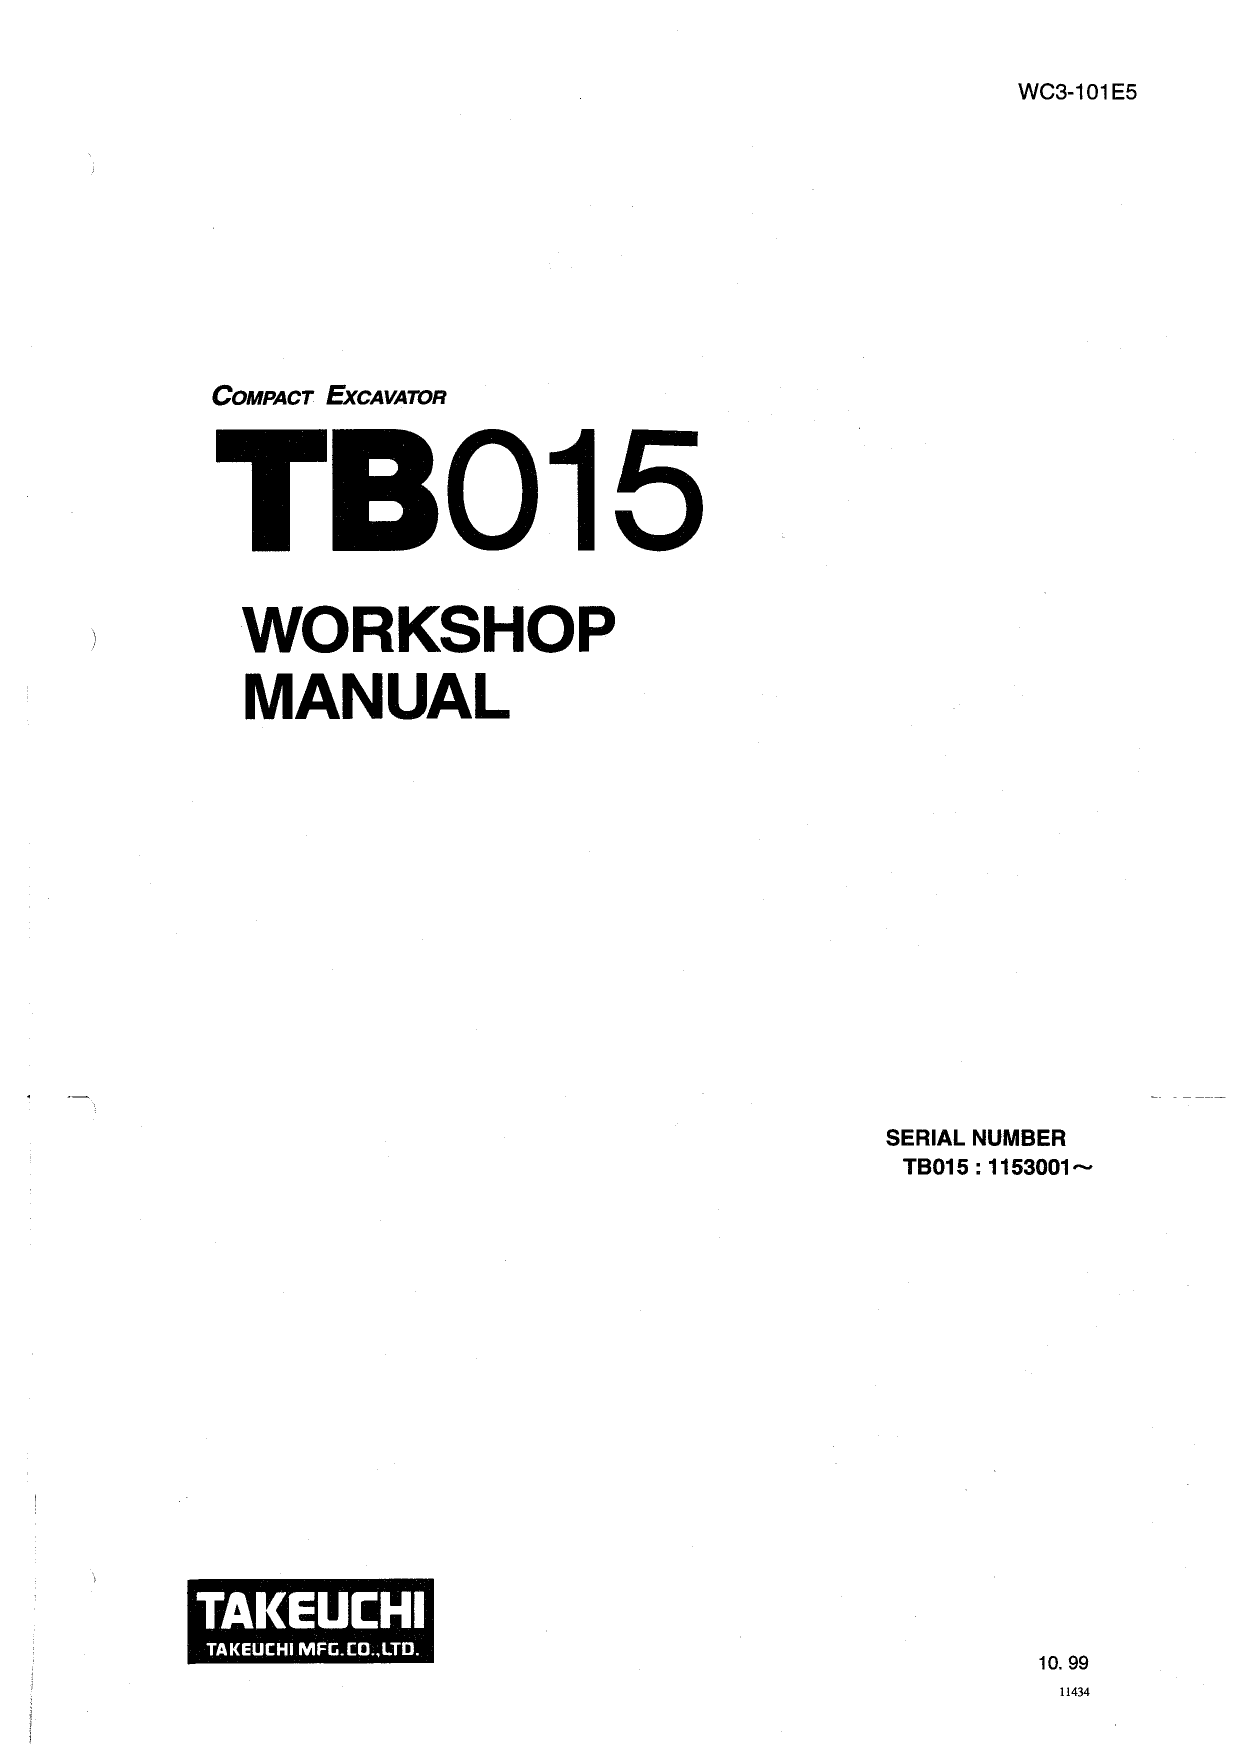 Takeuchi TB015 compact excavator workshop manual Preview image 1